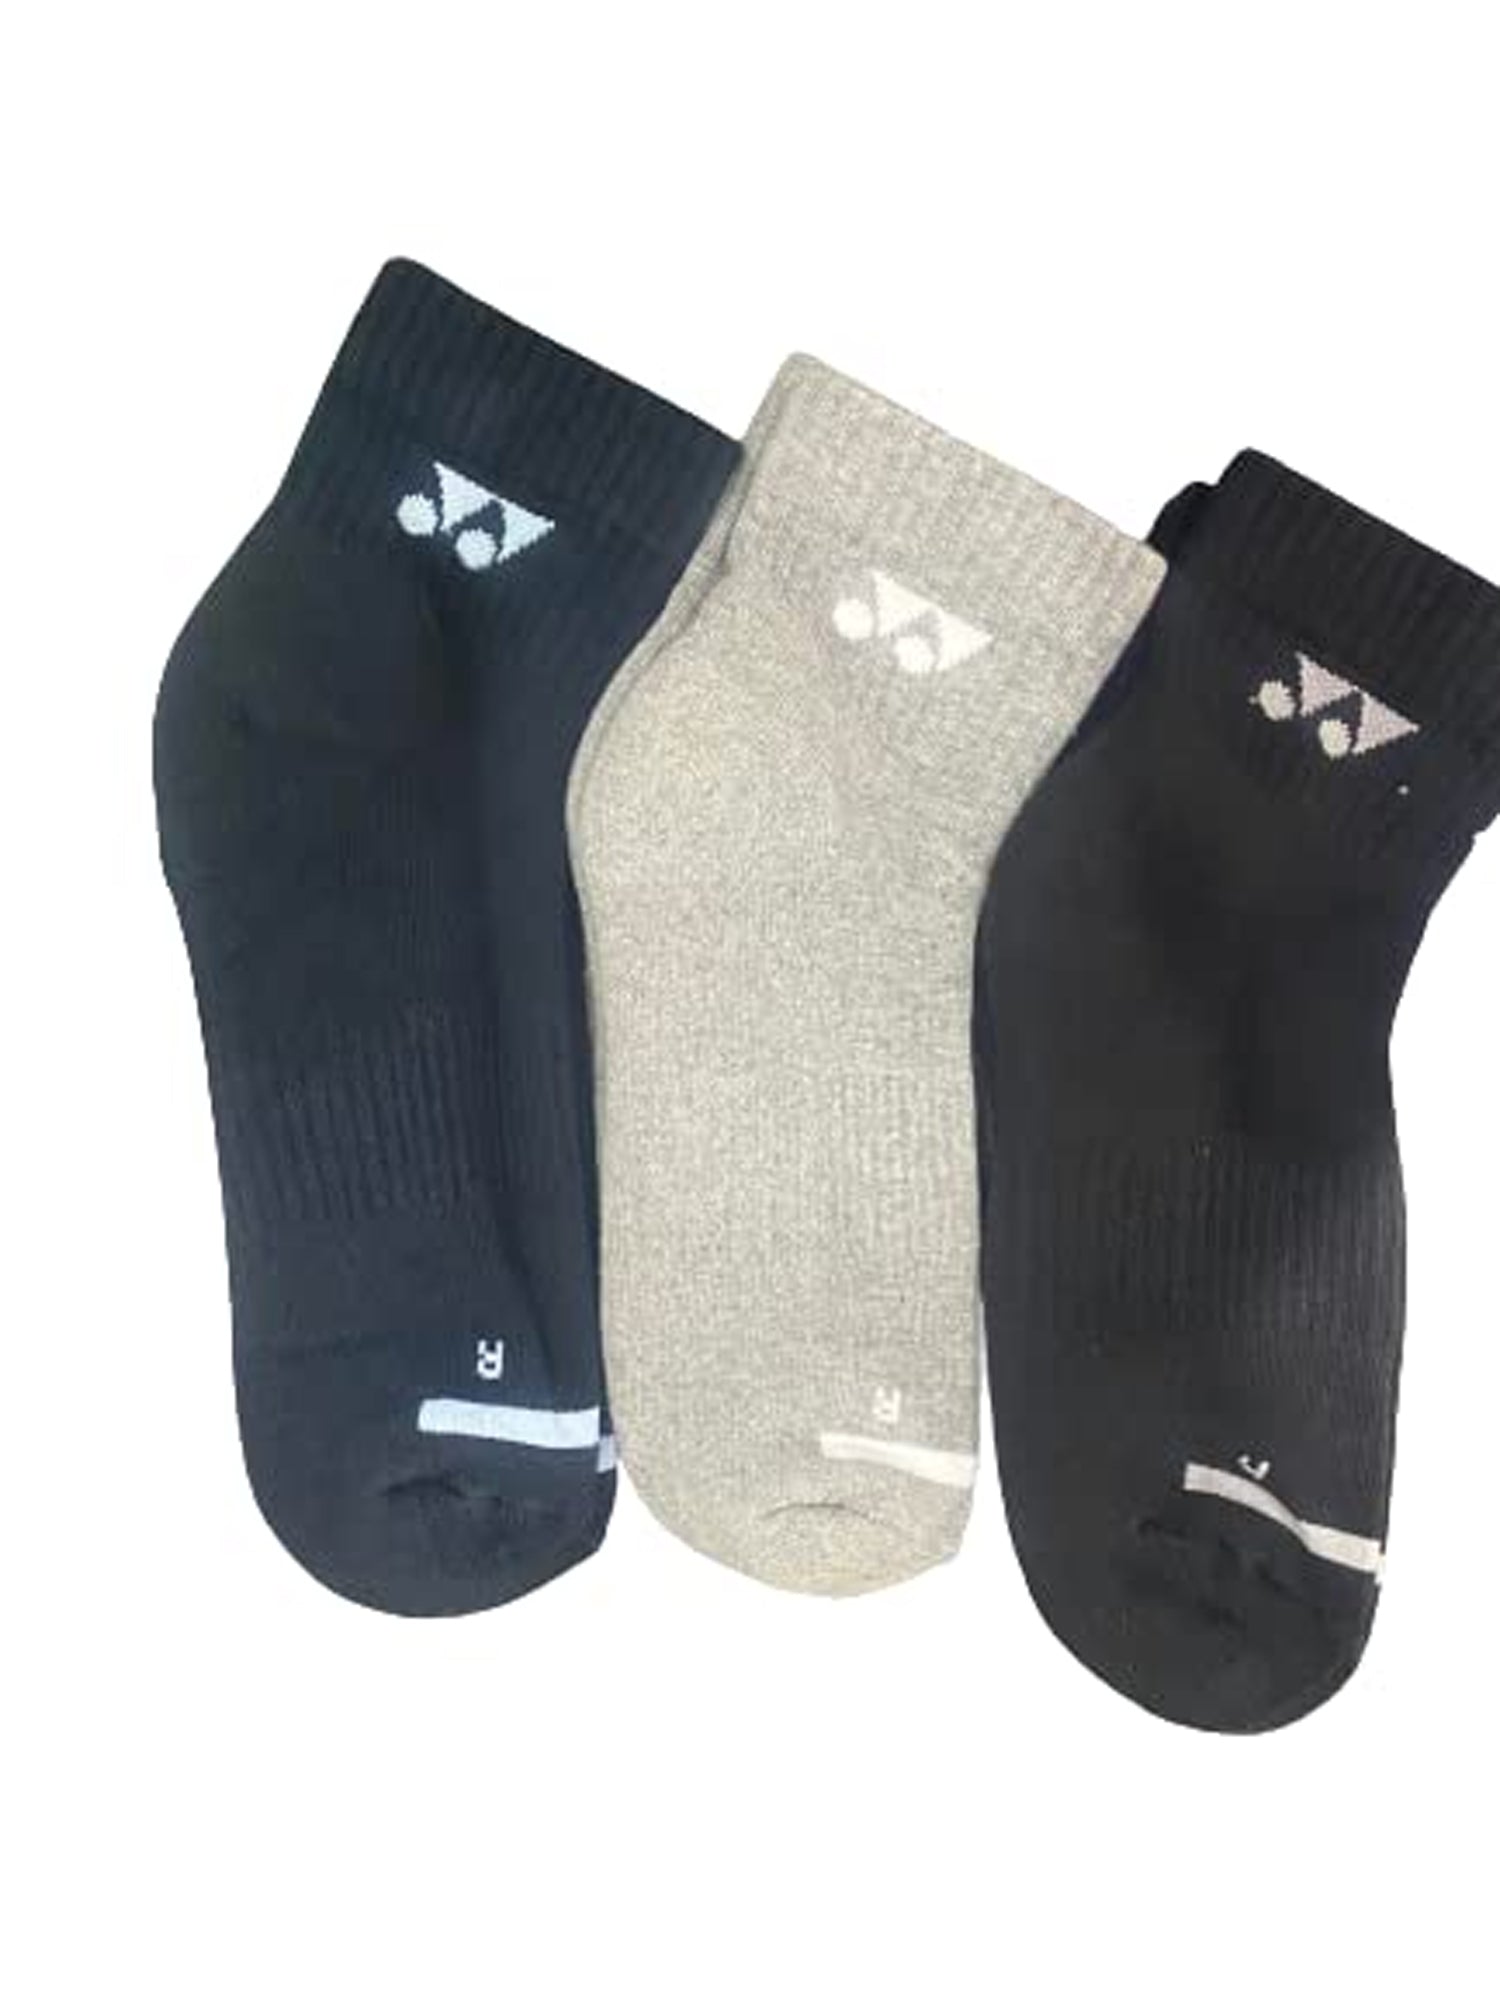 Yonex SKS SIS 2160A Ankle Socks, 3 Pair - Black/Melange Grey/Navy - Best Price online Prokicksports.com